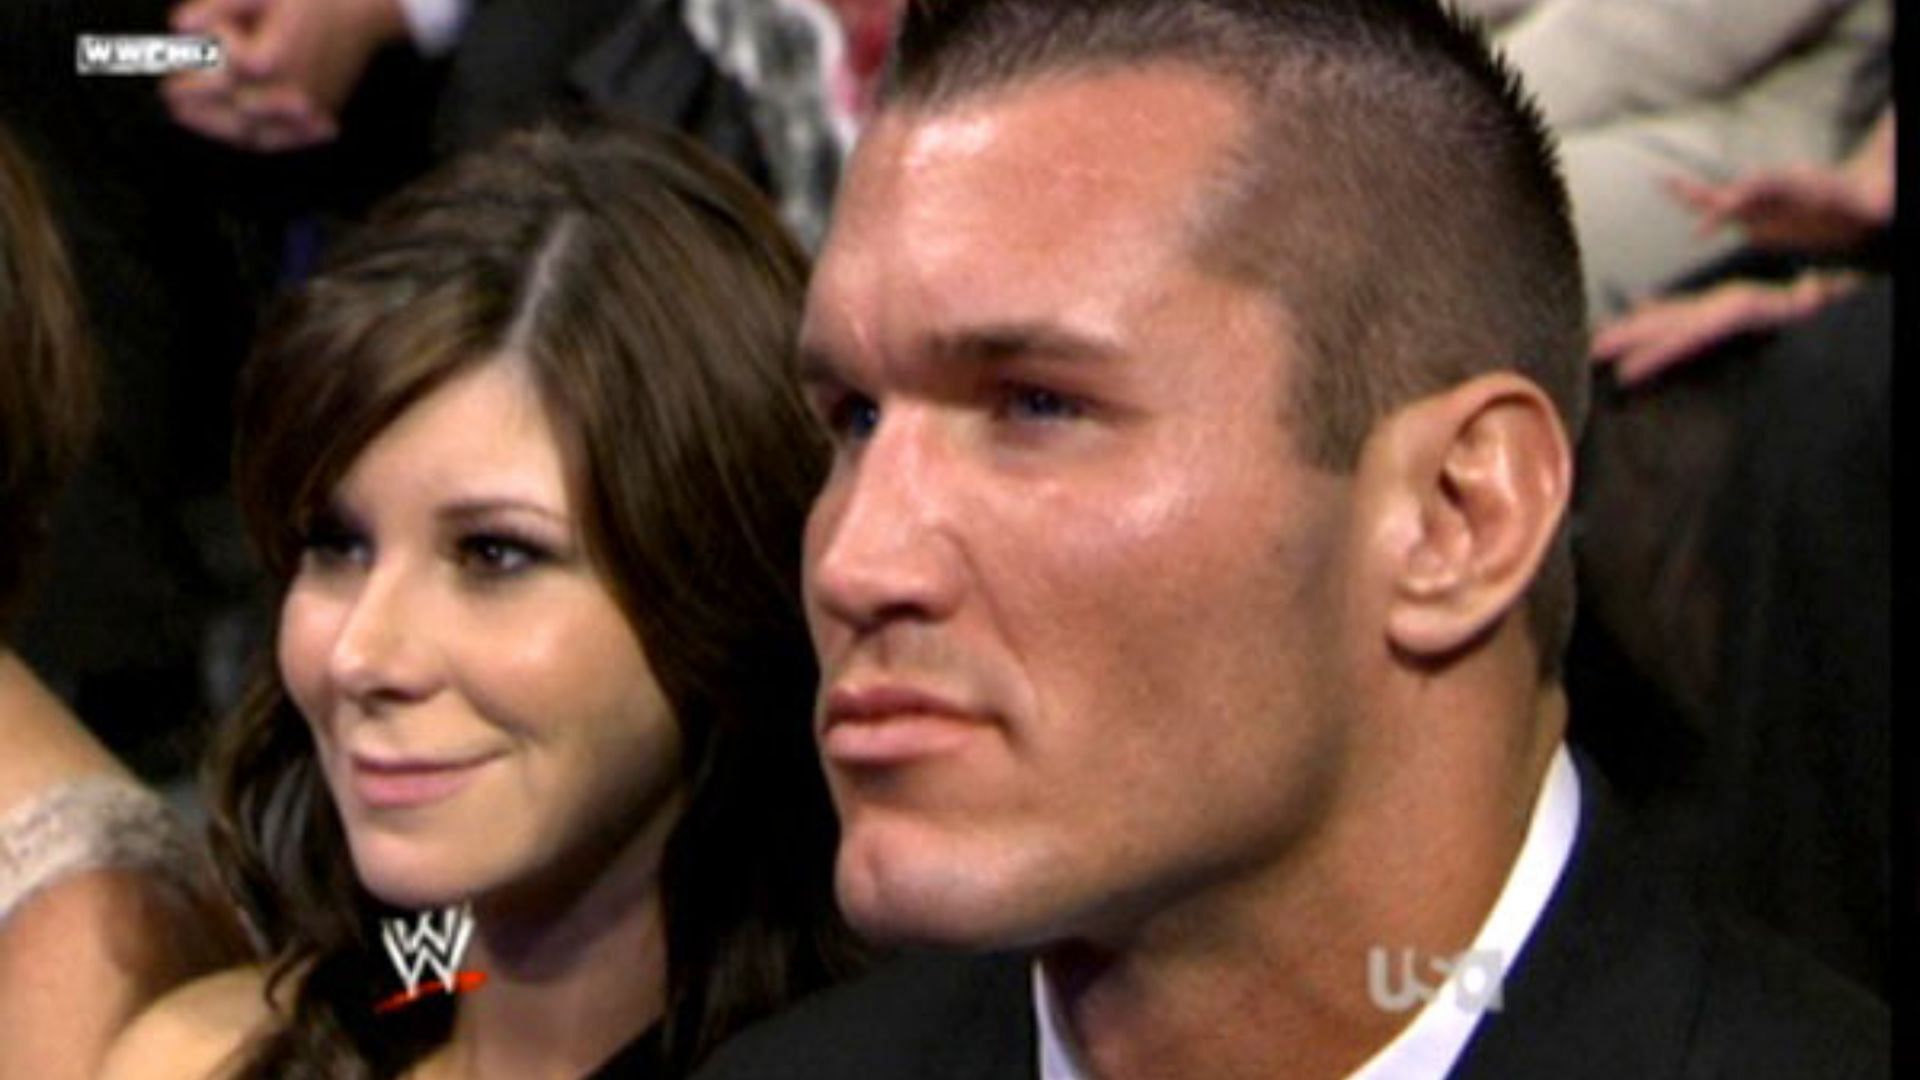 Randy Orton with Samantha Speno